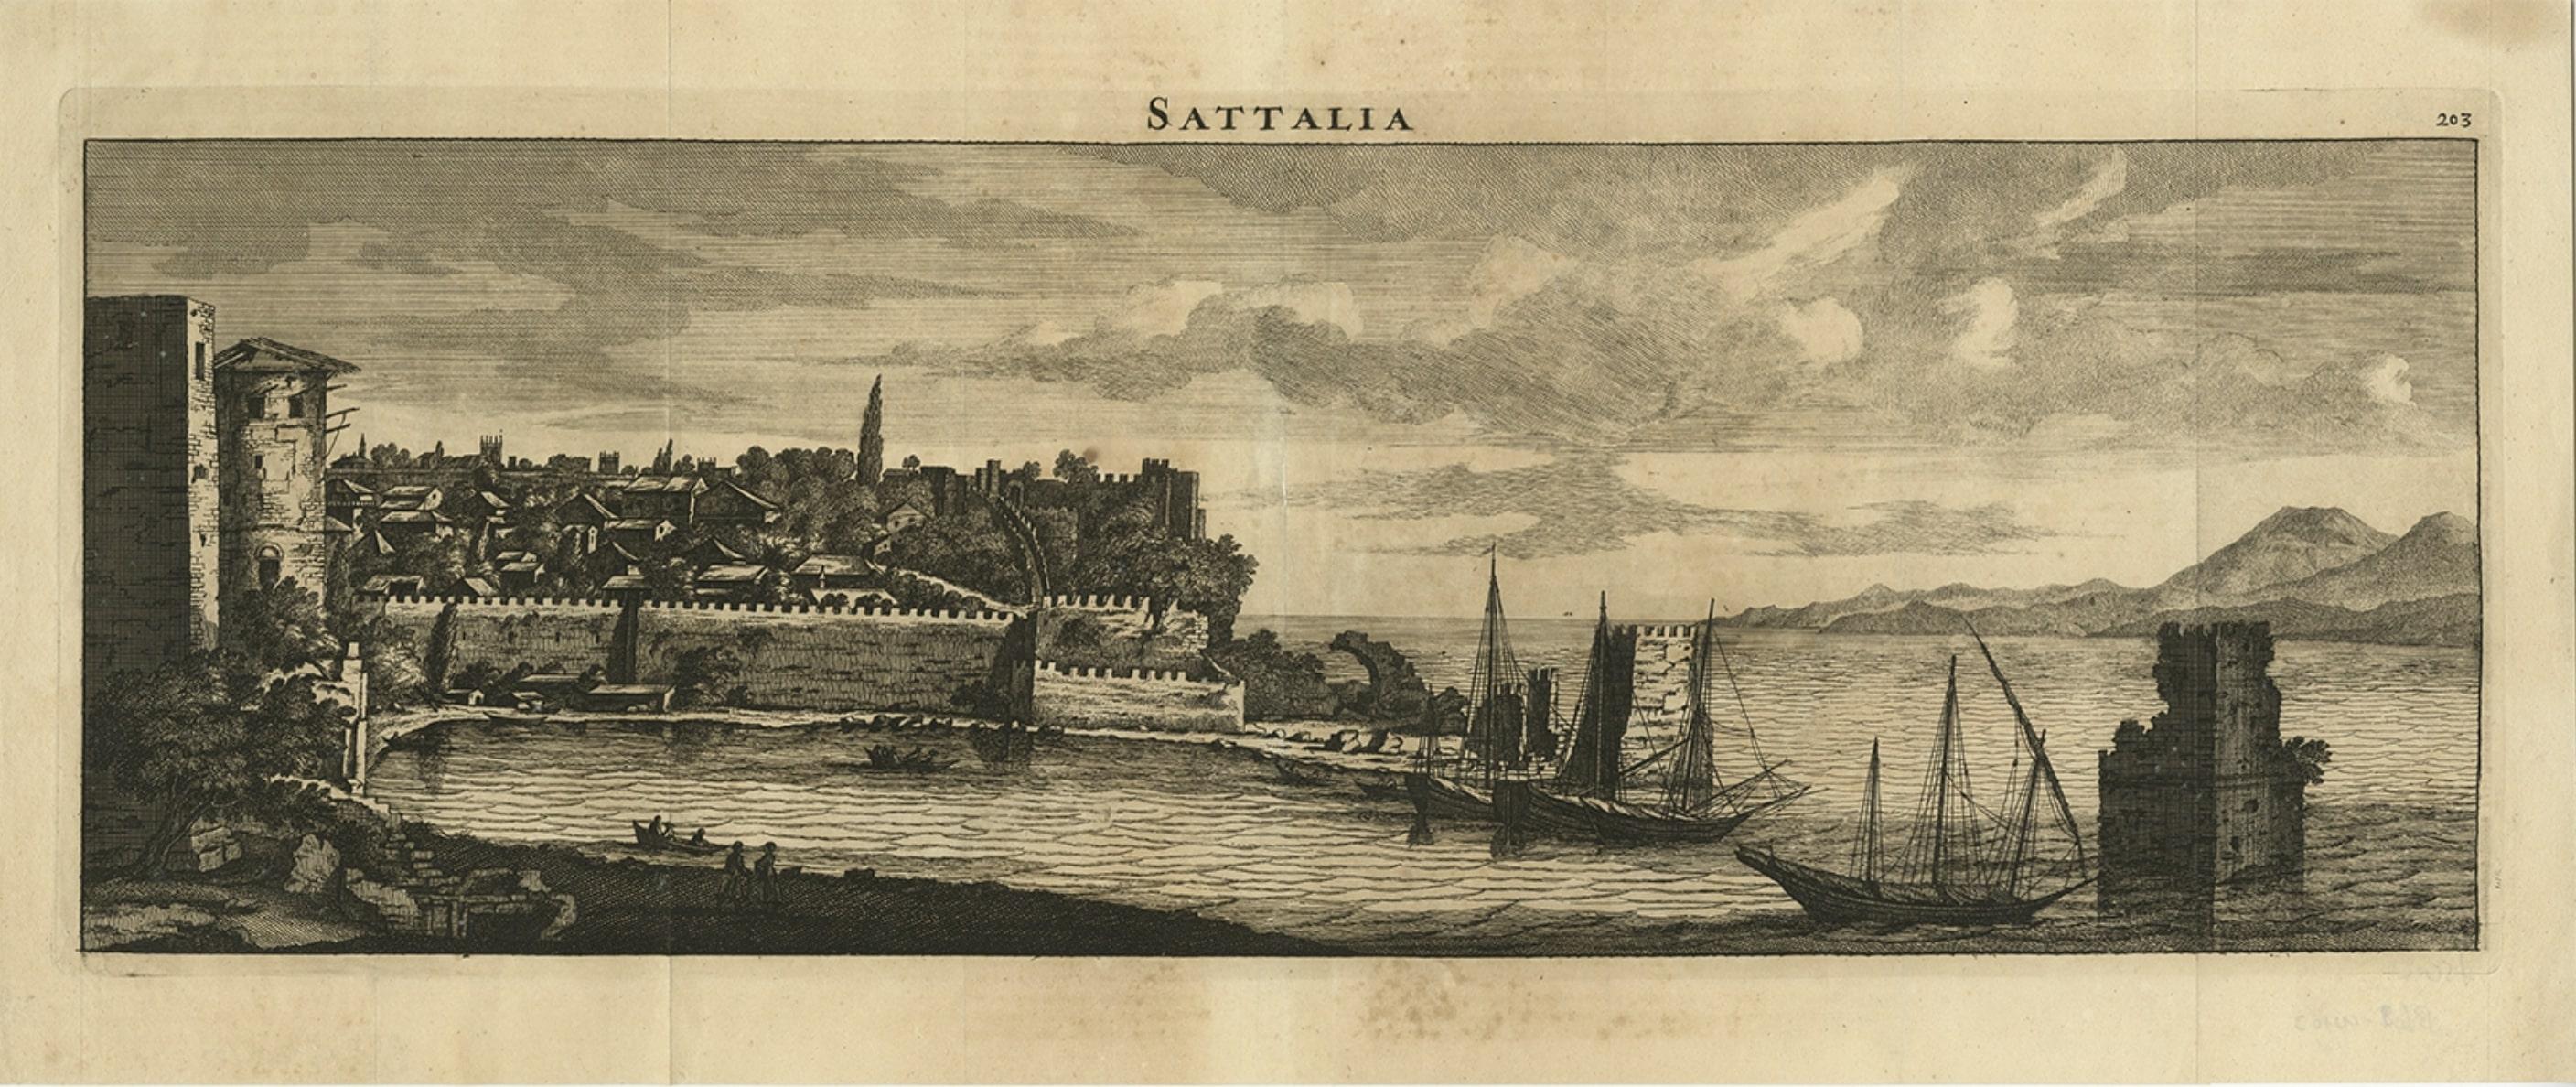 Description: Antique print Turkey titled 'Sattalia'. Beautiful view of Sattalia. Sattalia was one of the most important cities of the Ottoman Empire. Originates from 'Reizen van Cornelis de Bruyn (..)'. 

Artists and Engravers: Cornelis de Bruijn